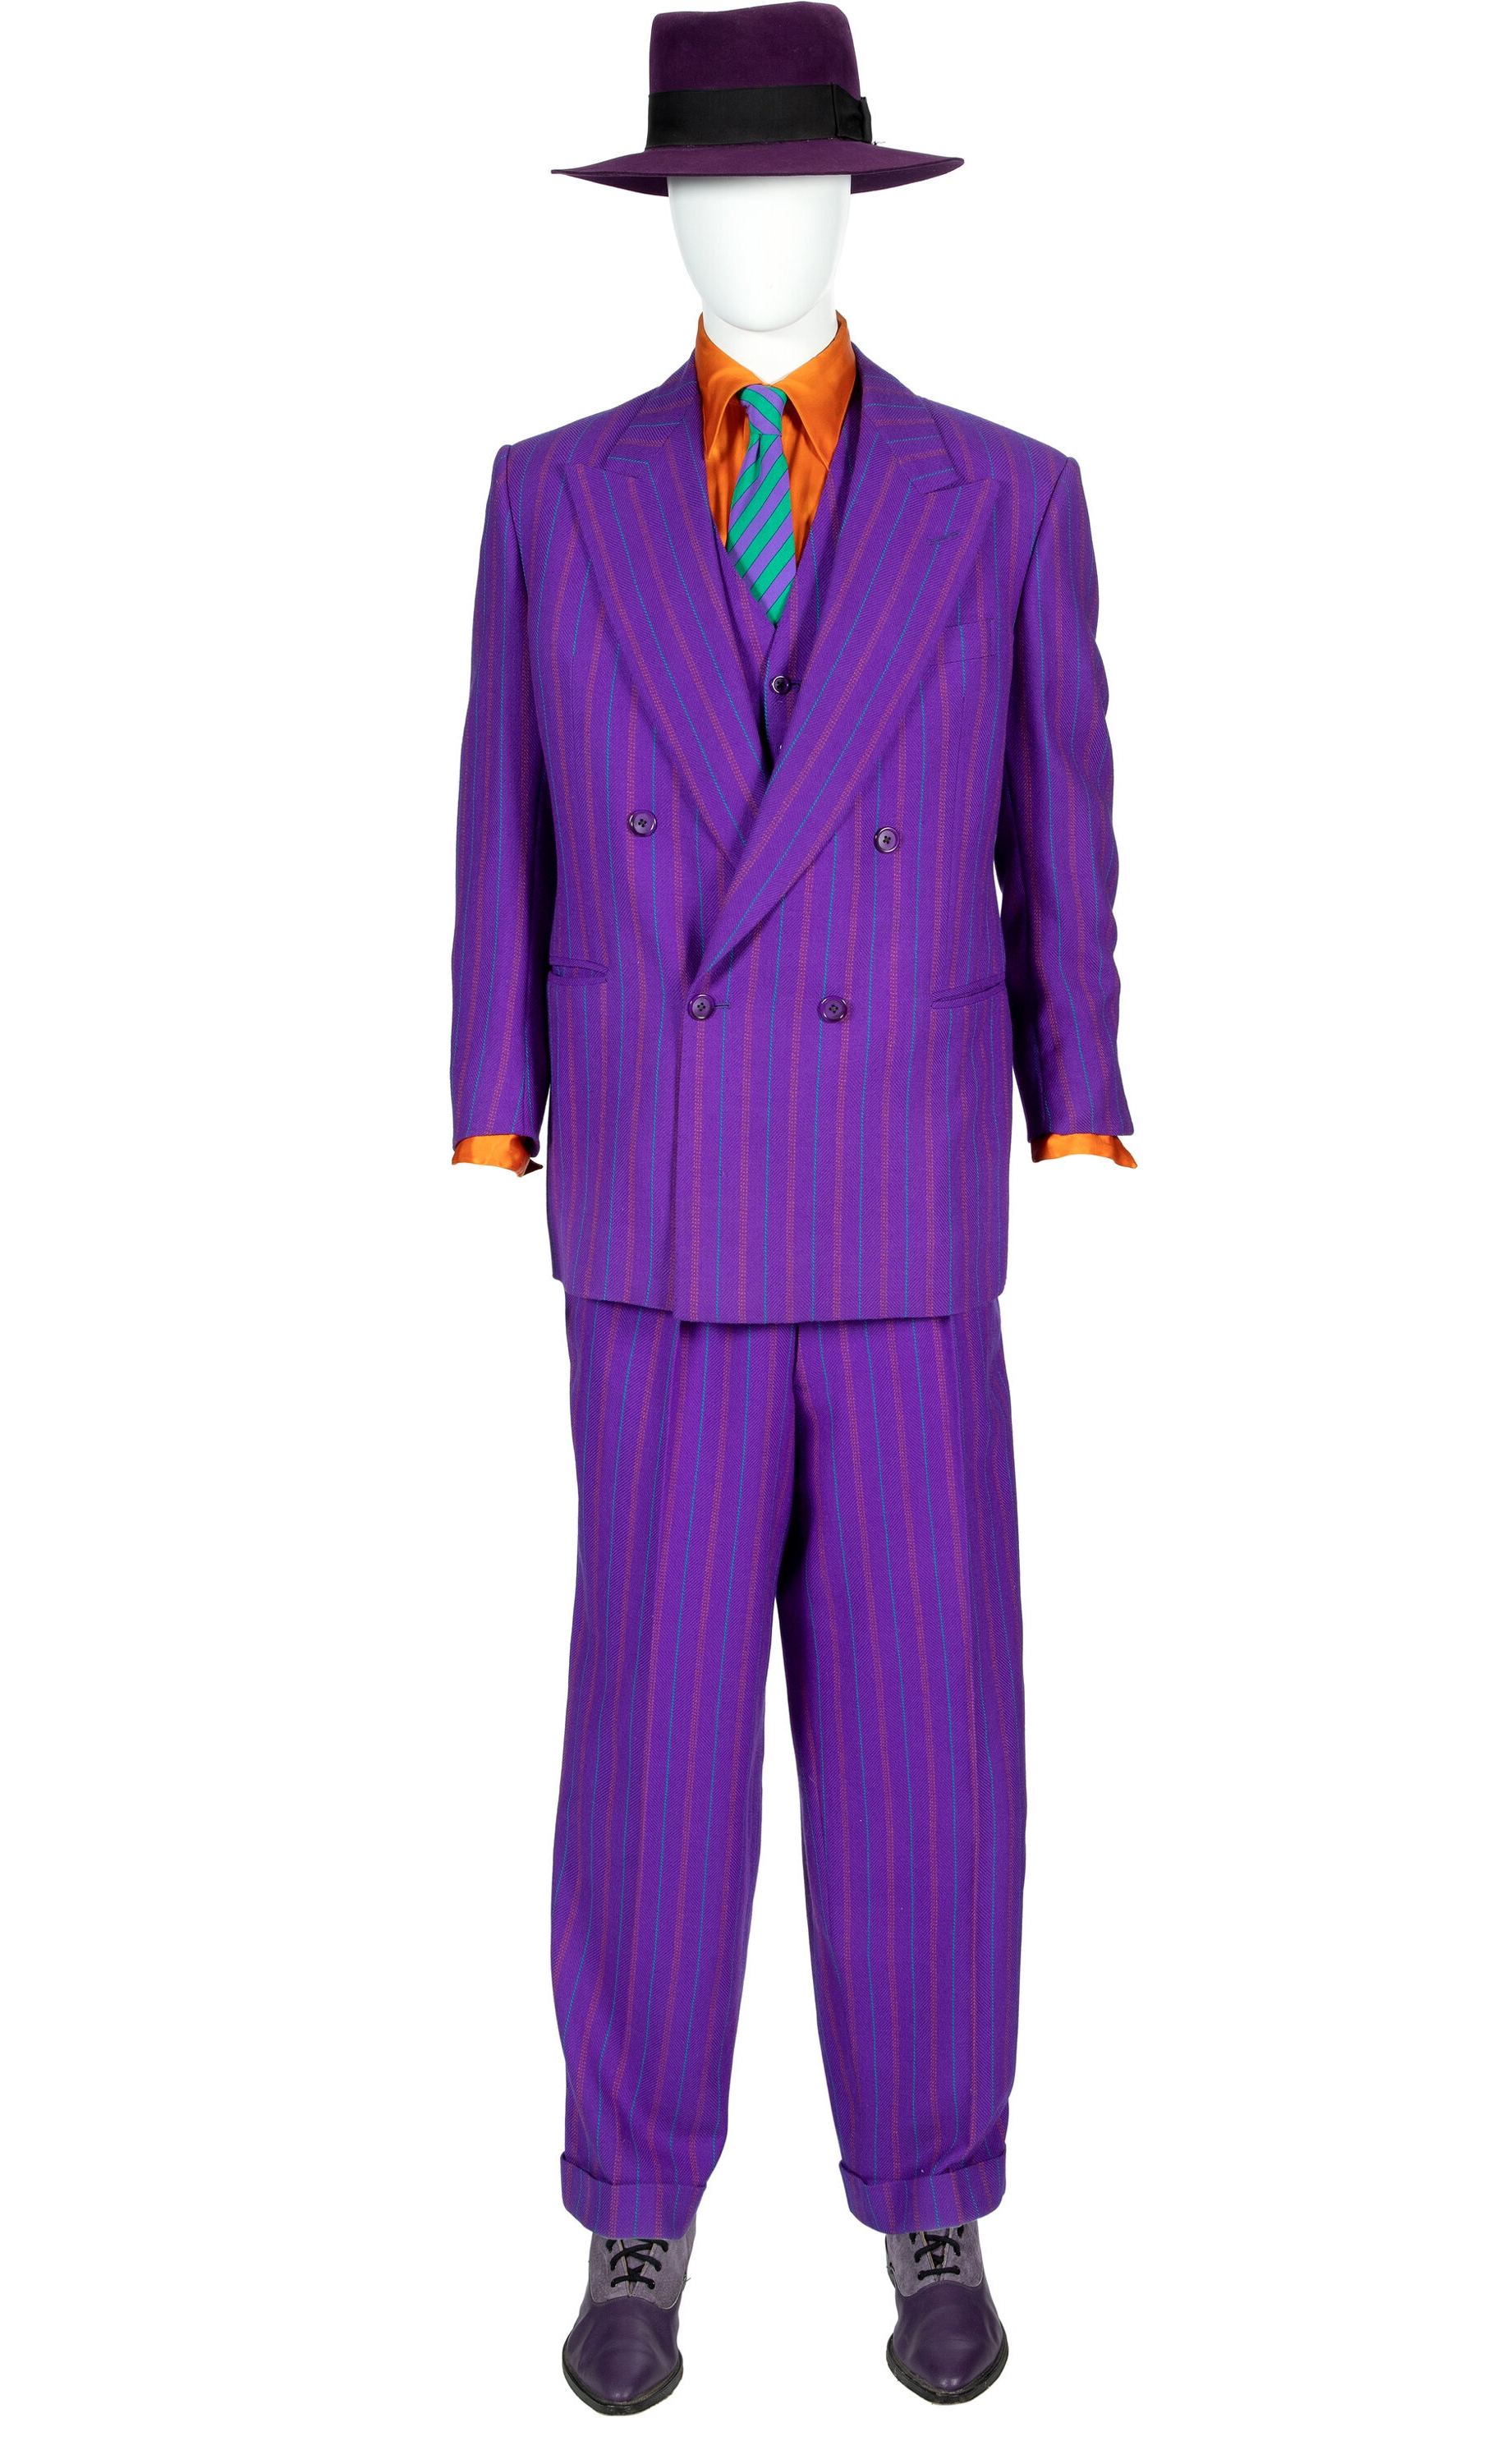 Nicholson's Joker costume runs away with $125K at Heritage